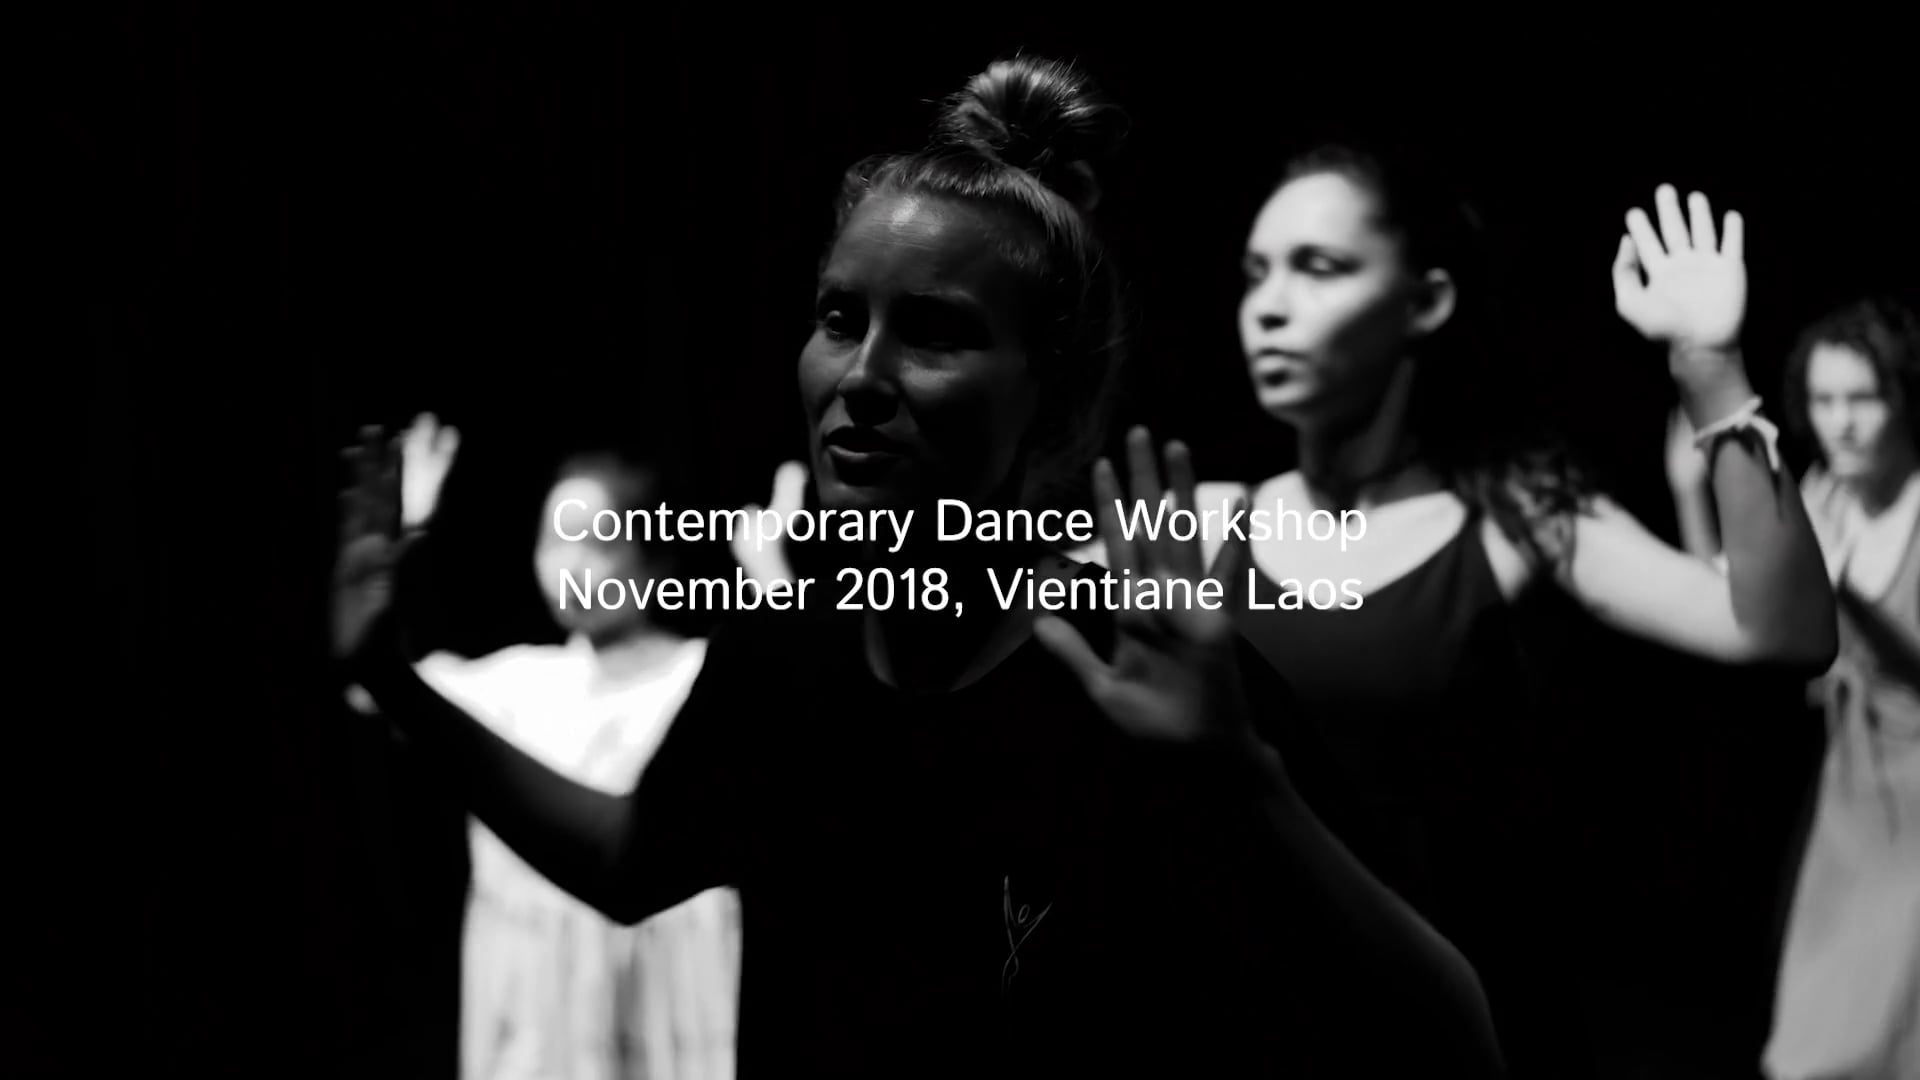 Jill Crovisier, Contemporary Dance Workshop at Fanglao Blackbox, November 2018